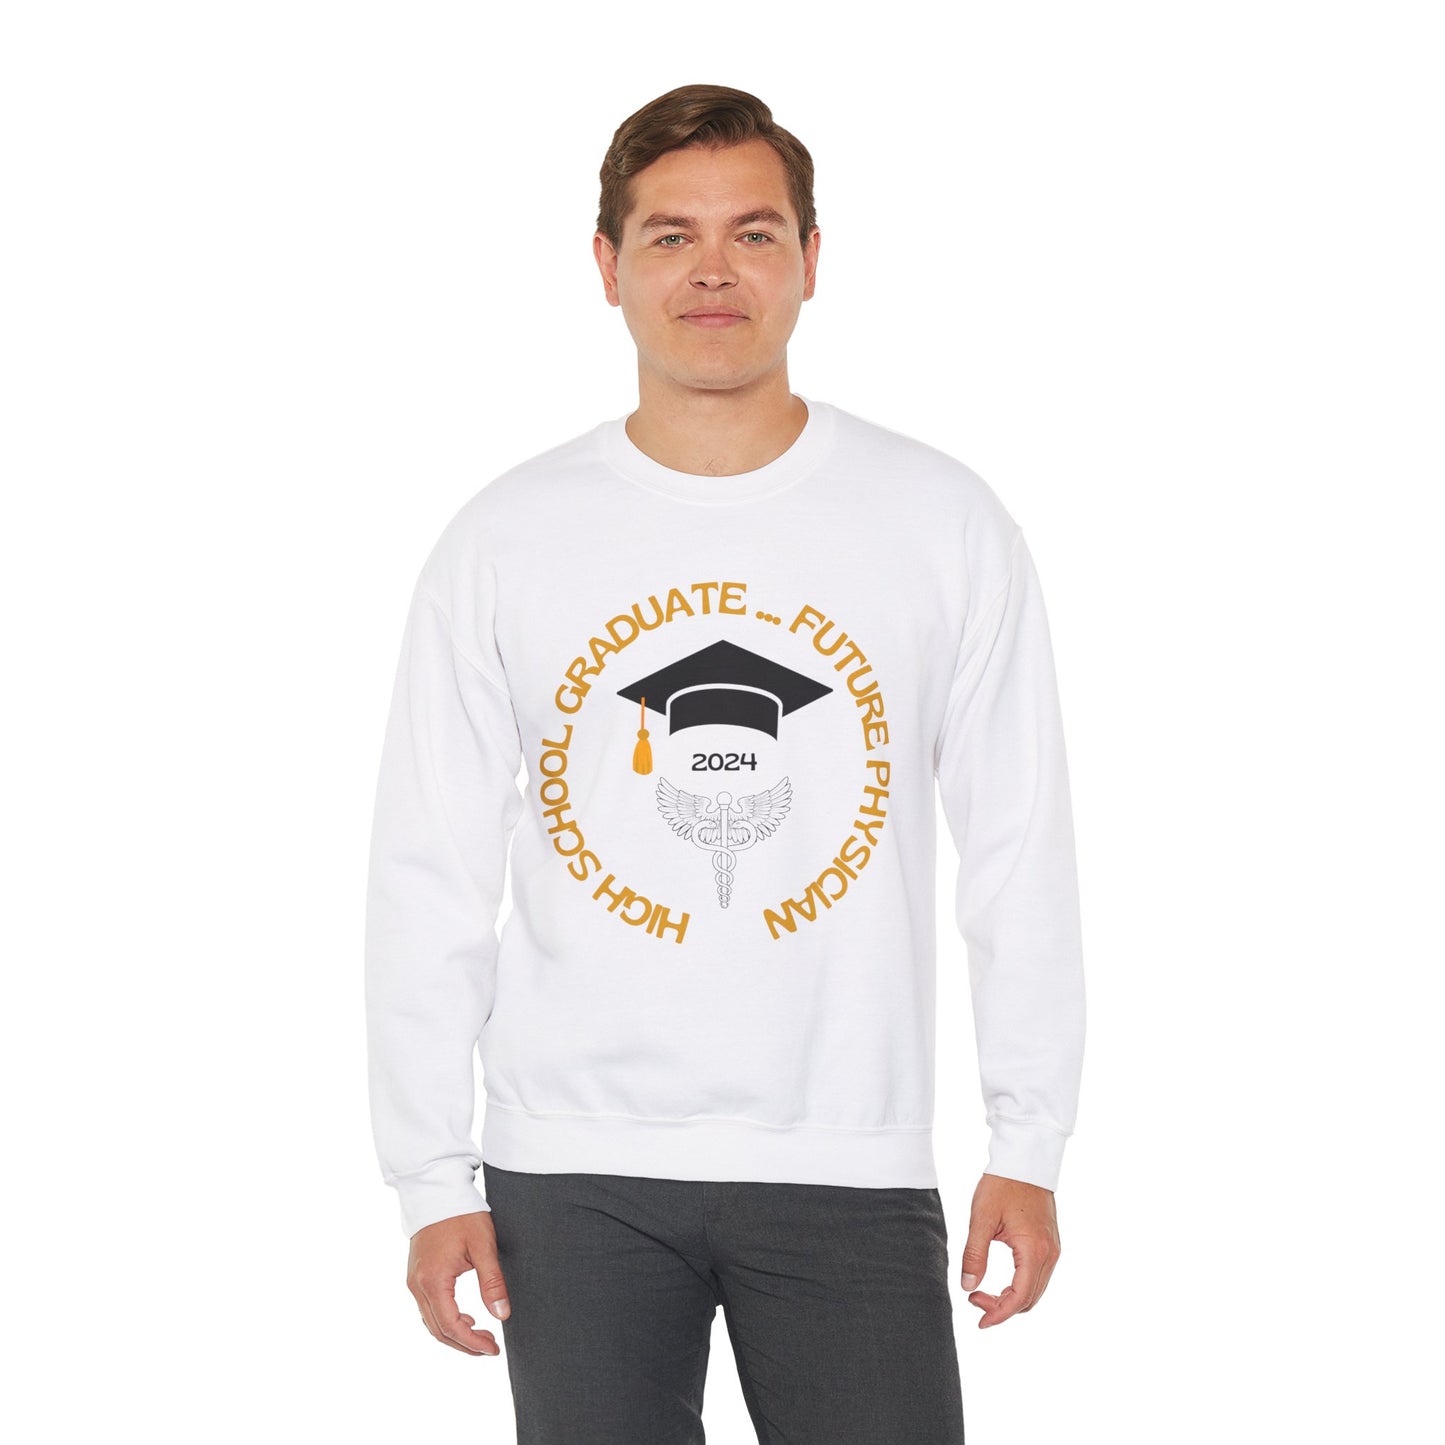 Future Physician Crewneck Sweatshirt